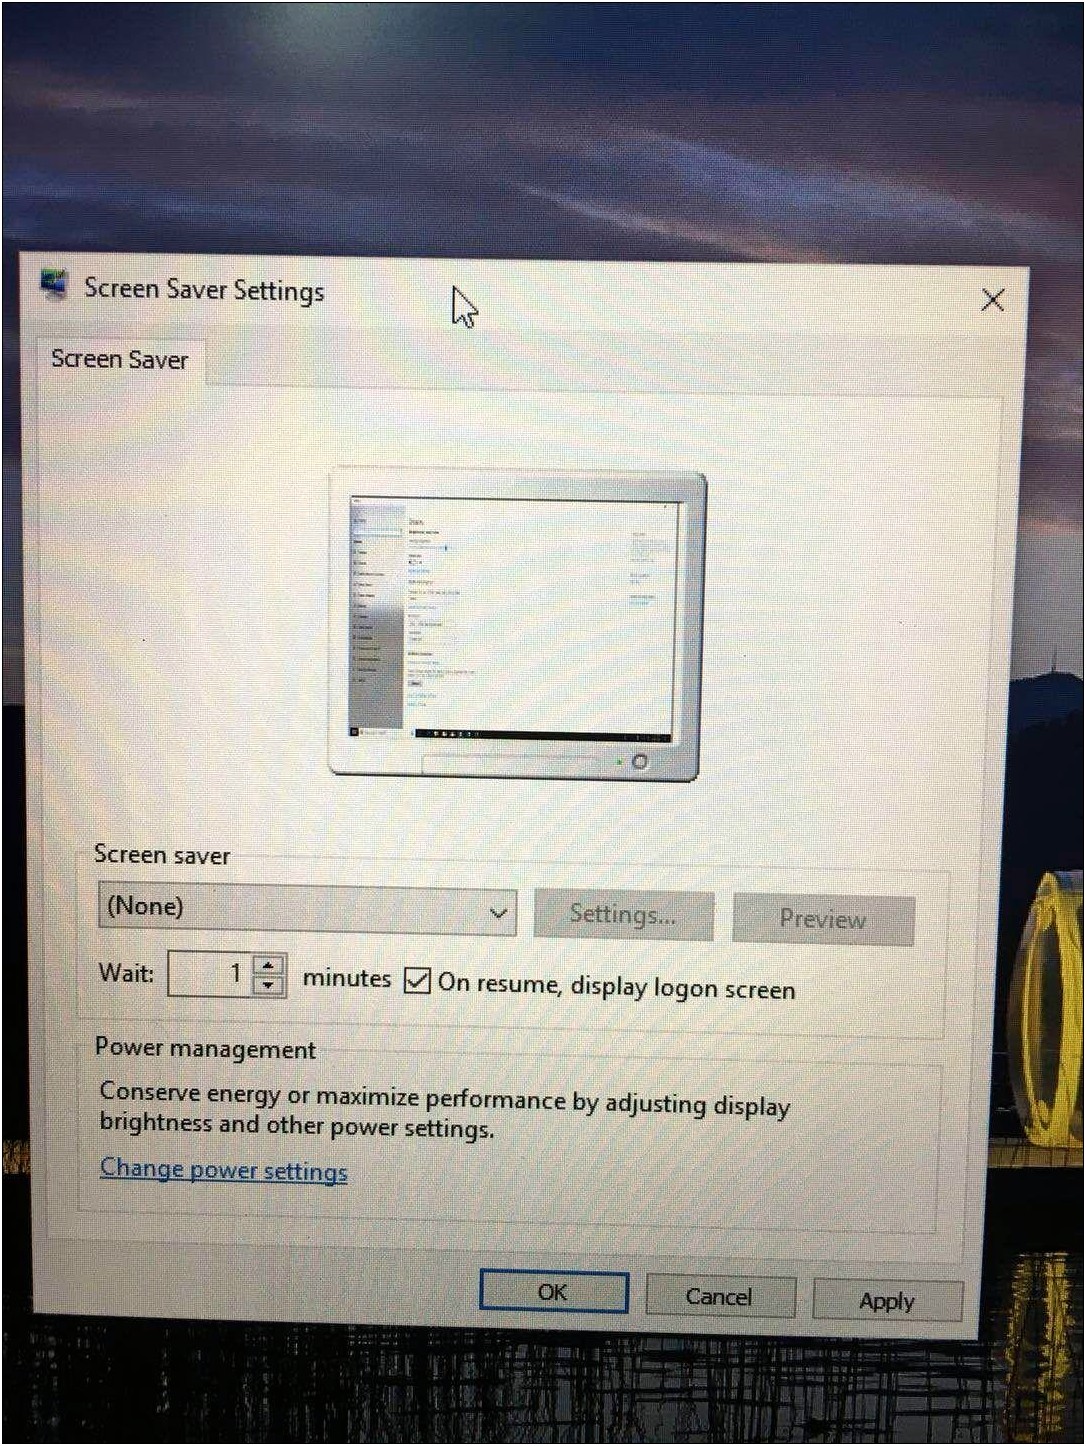 On Resume Display Logon Screen Not Working